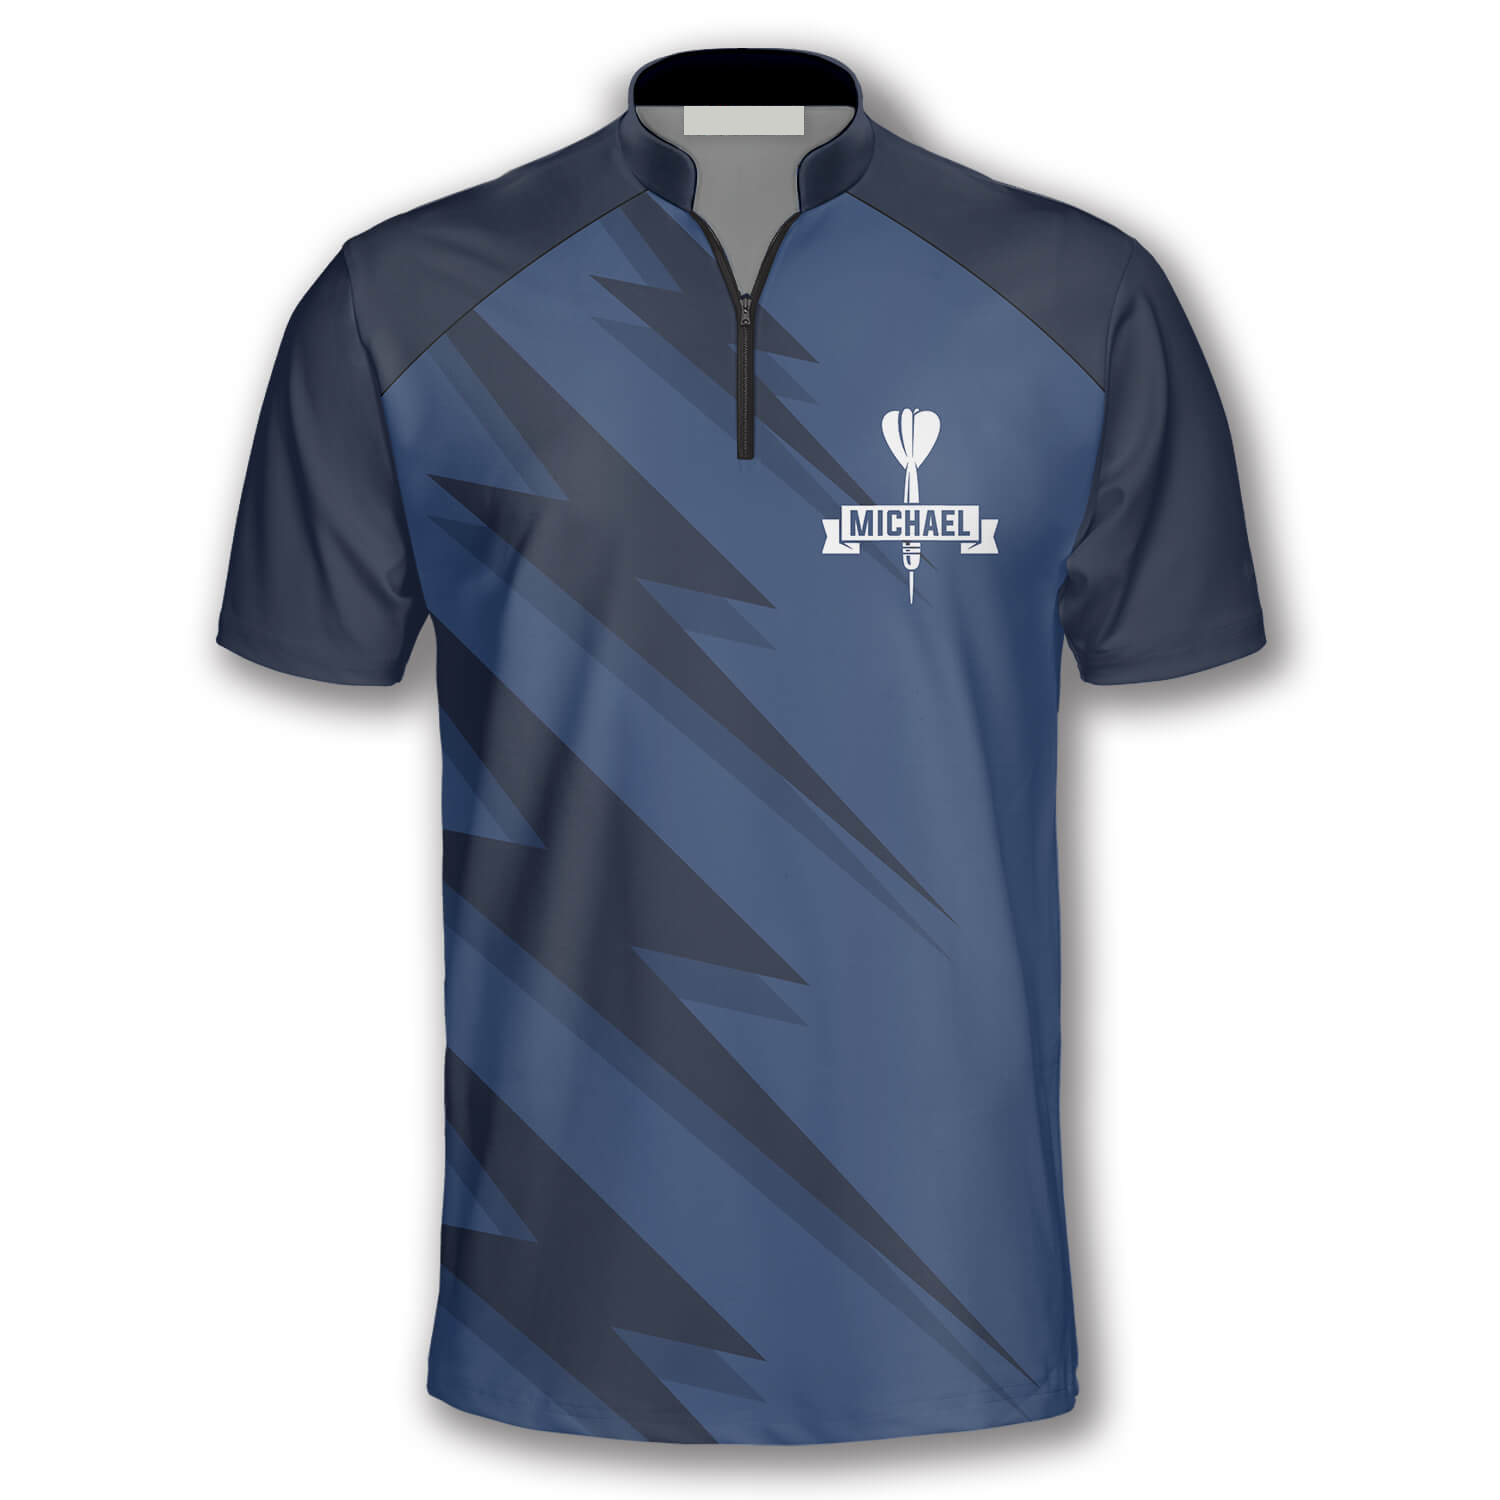 Personalized Name Team Blue Lightning Custom Darts Jerseys For Men/ Idea Gift for Dart Team